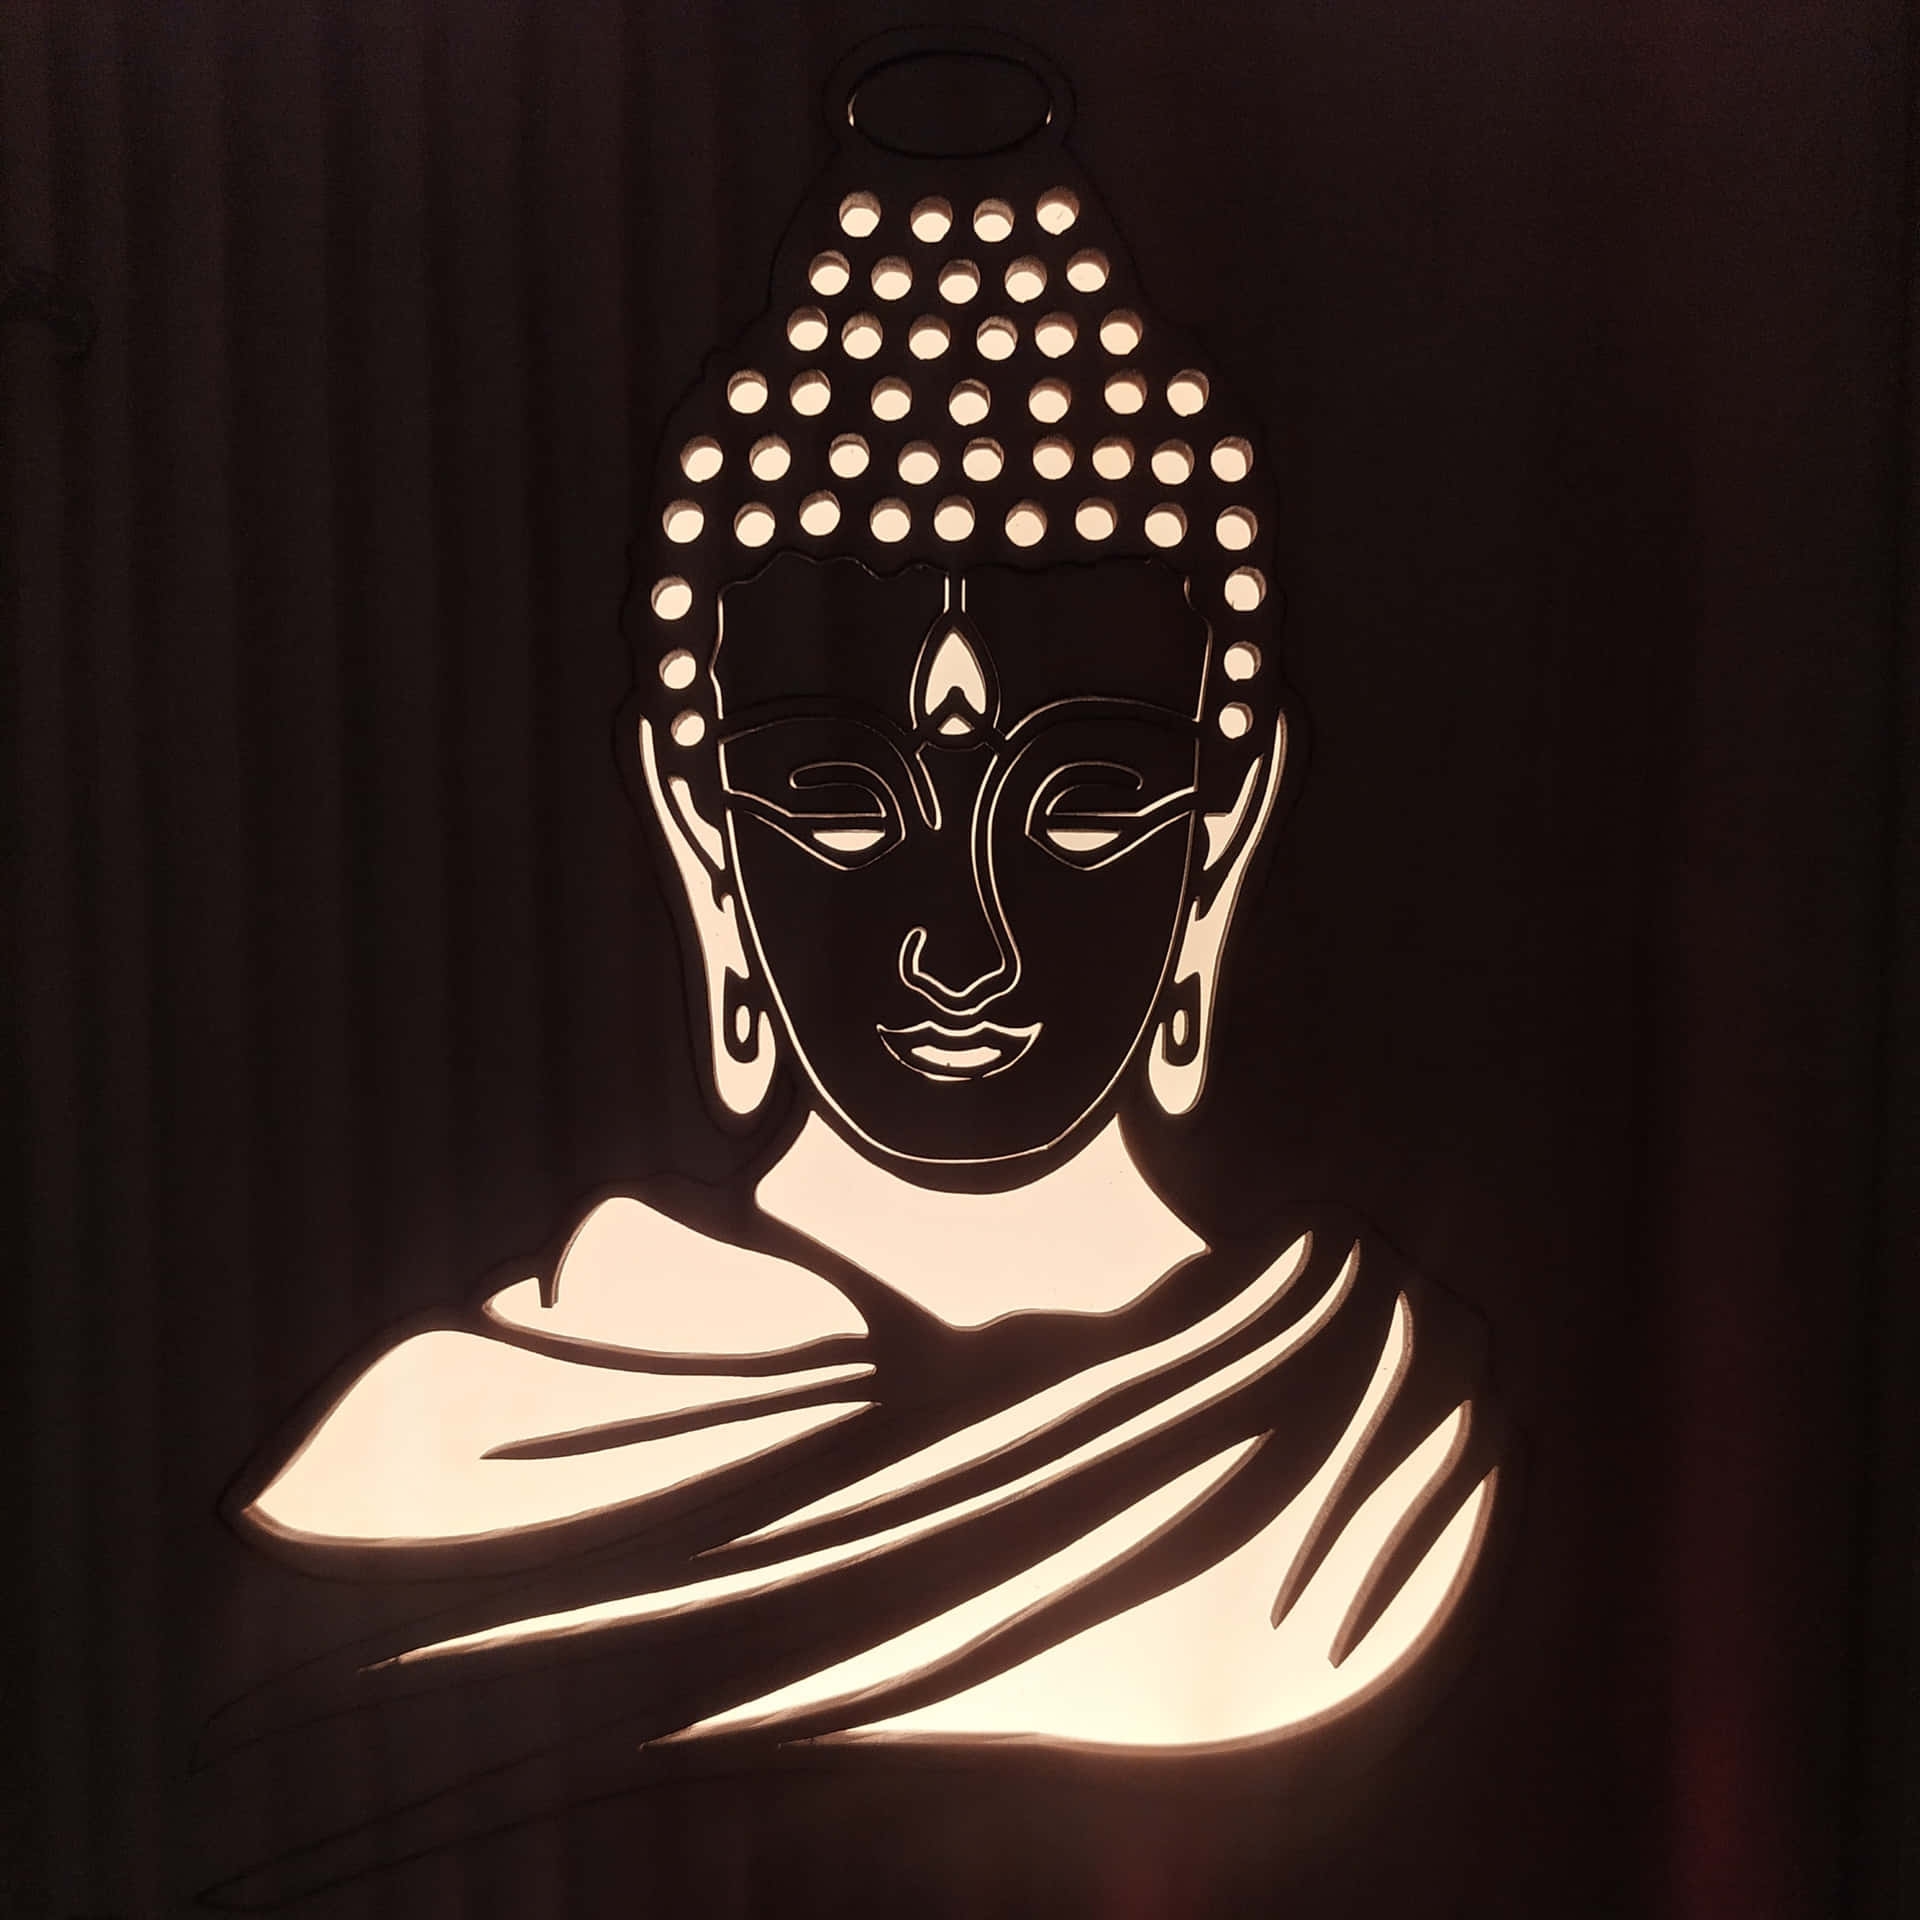 Illuminated Buddha Silhouette Wallpaper